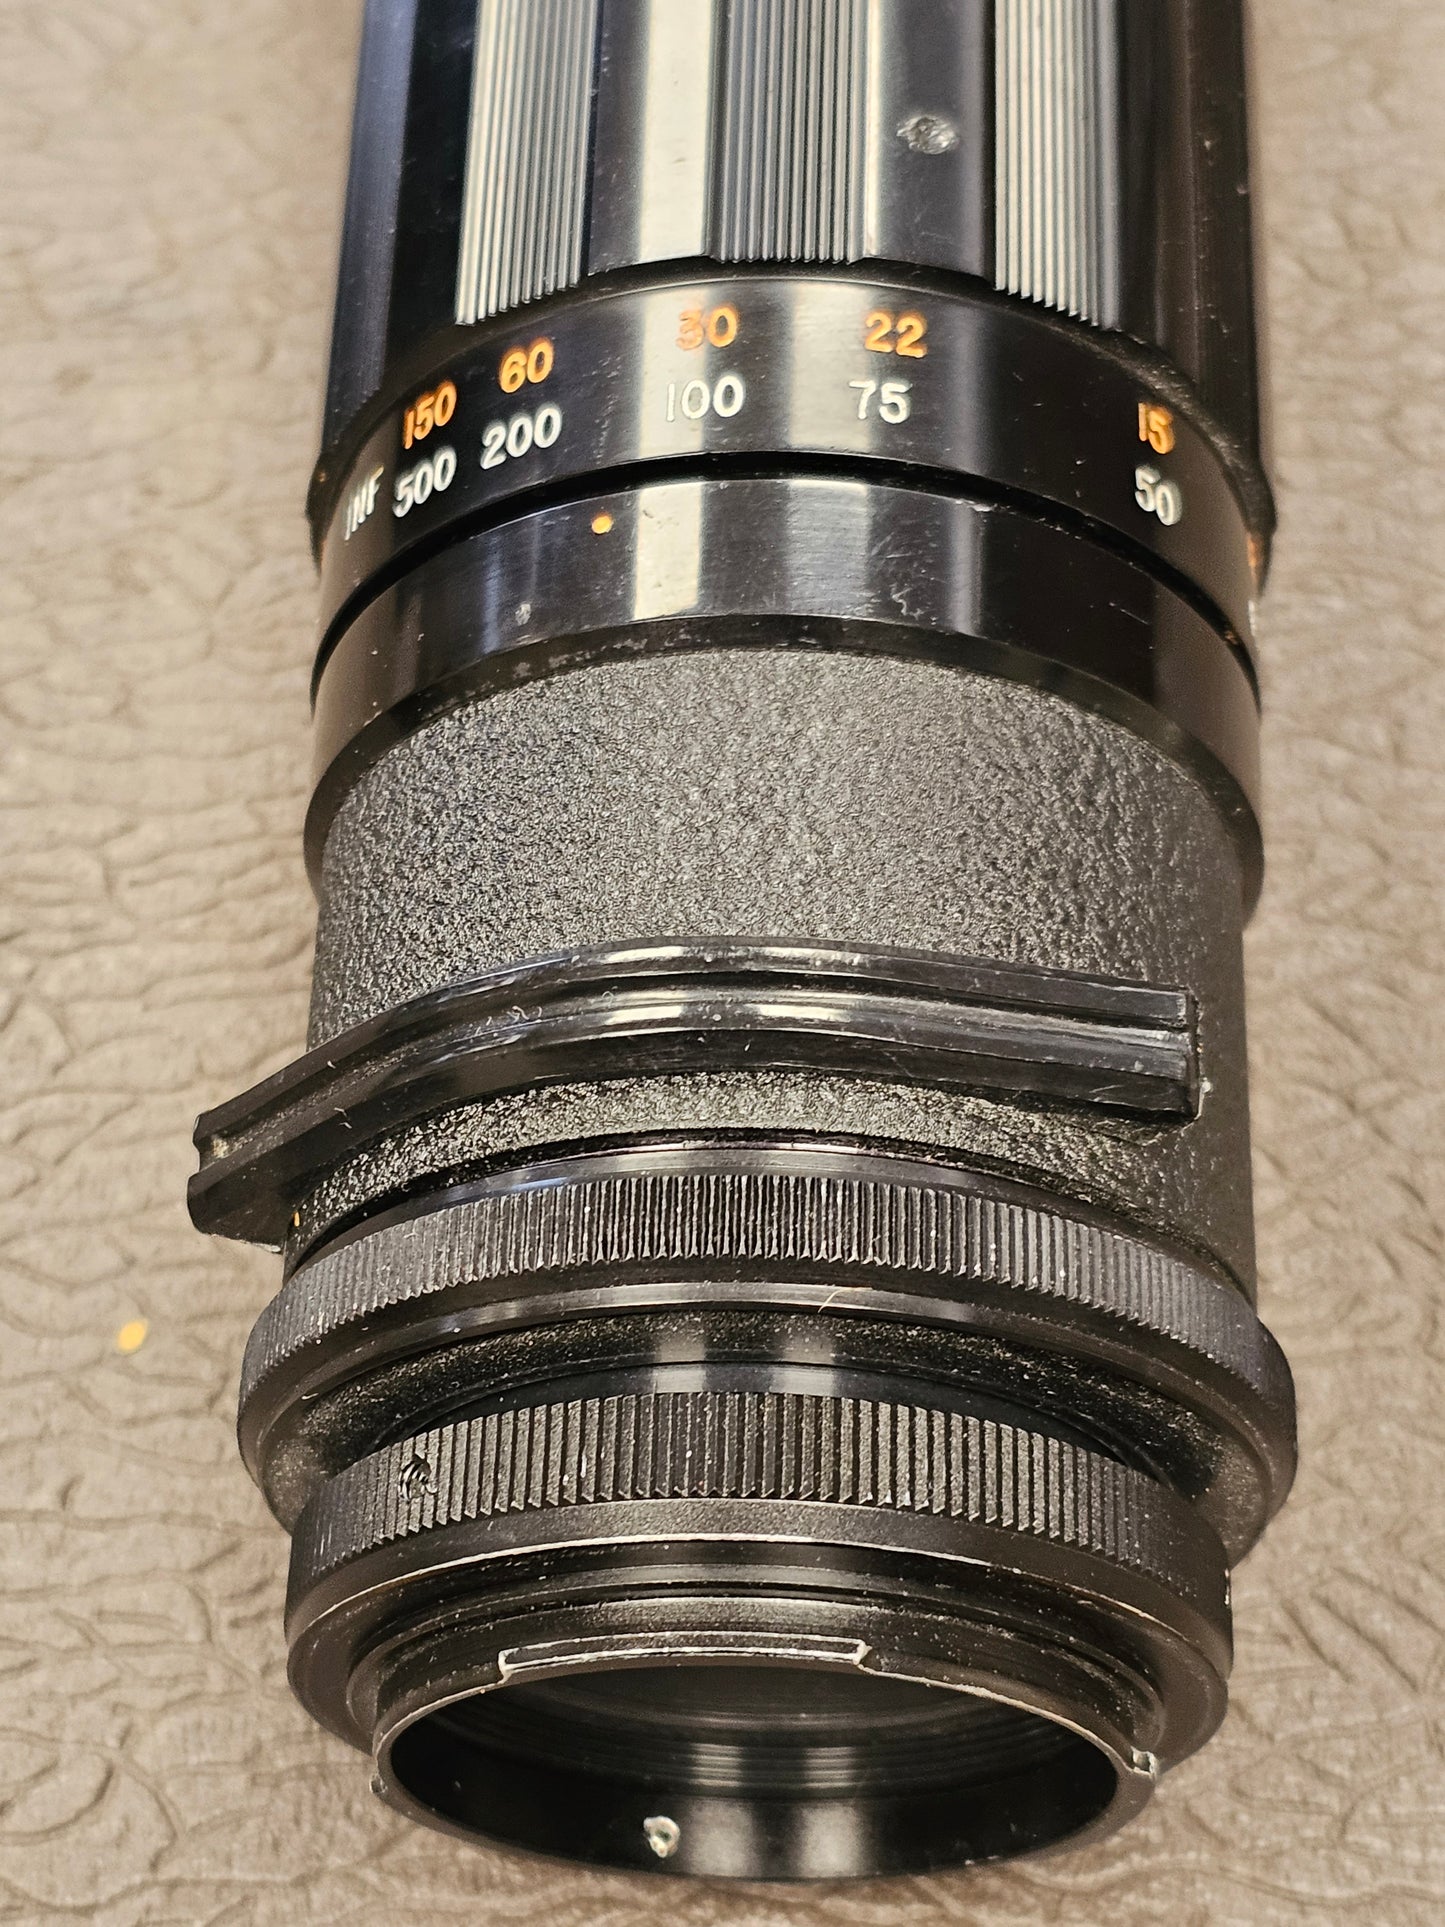 Century Tele-Anthenar II 385mm f4.5 Telephoto Lens Nikon Mount S# 813339